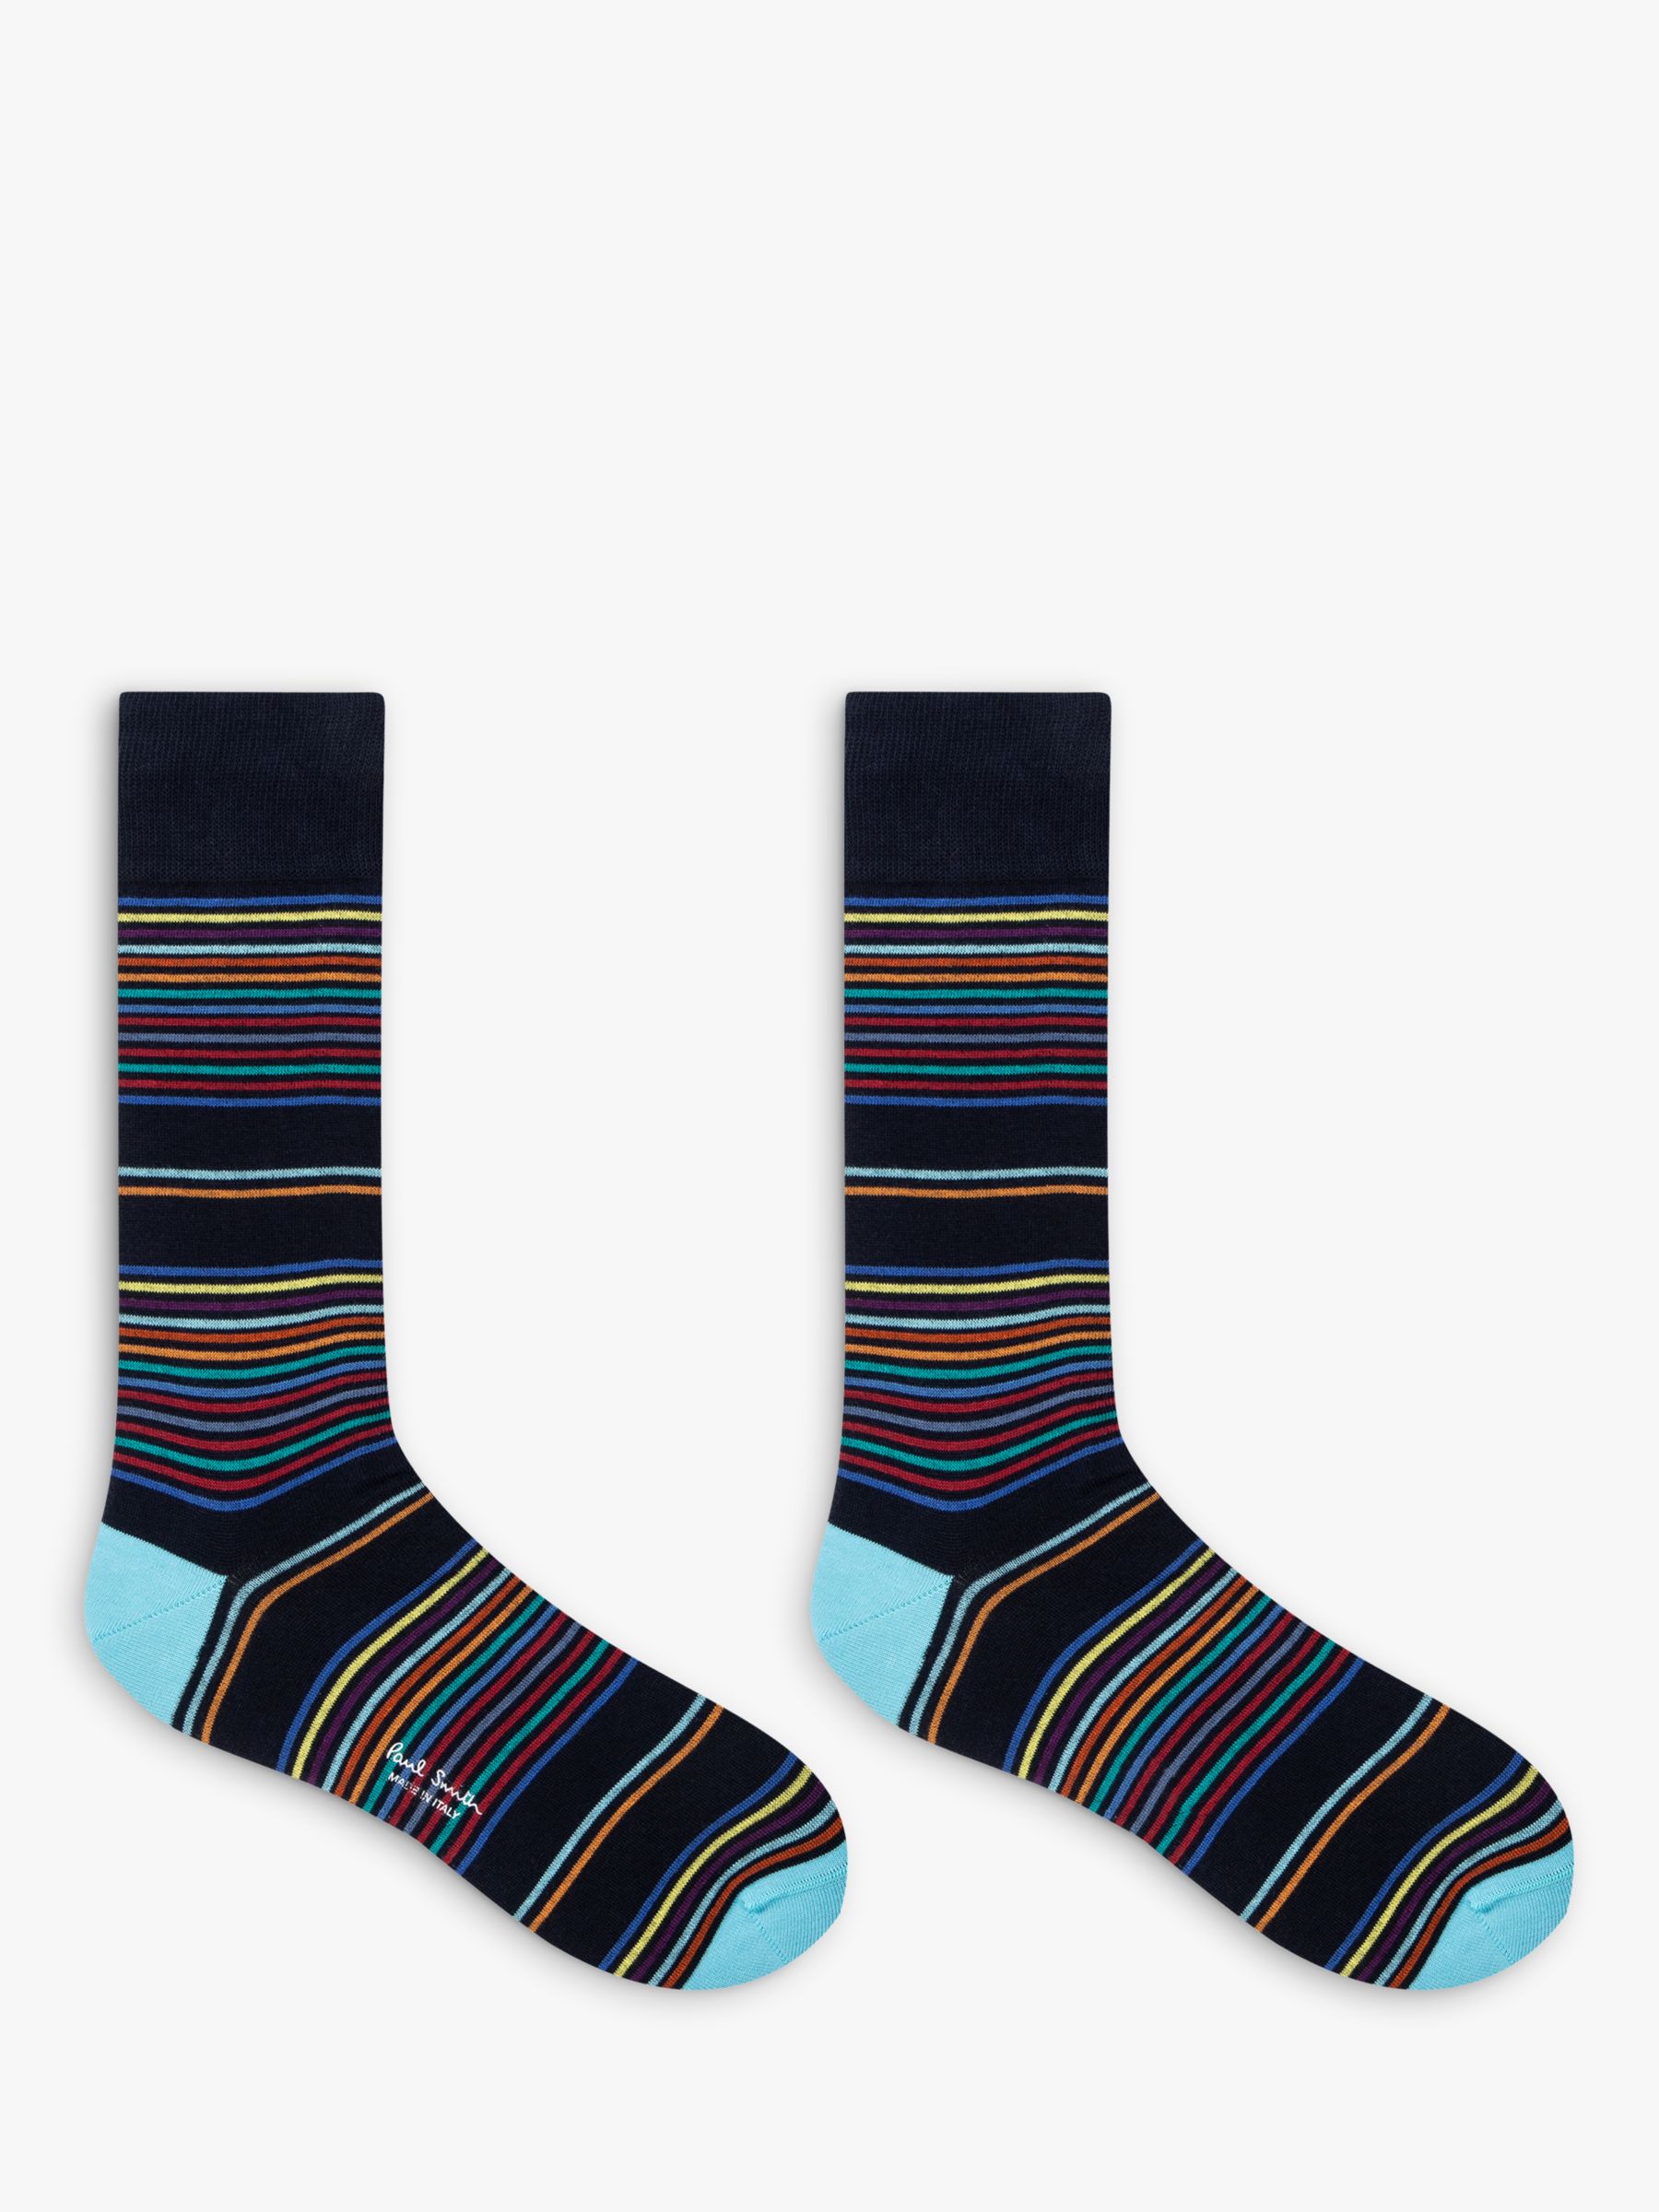 Paul Smith Elton Stripe Socks, Multi at John Lewis & Partners